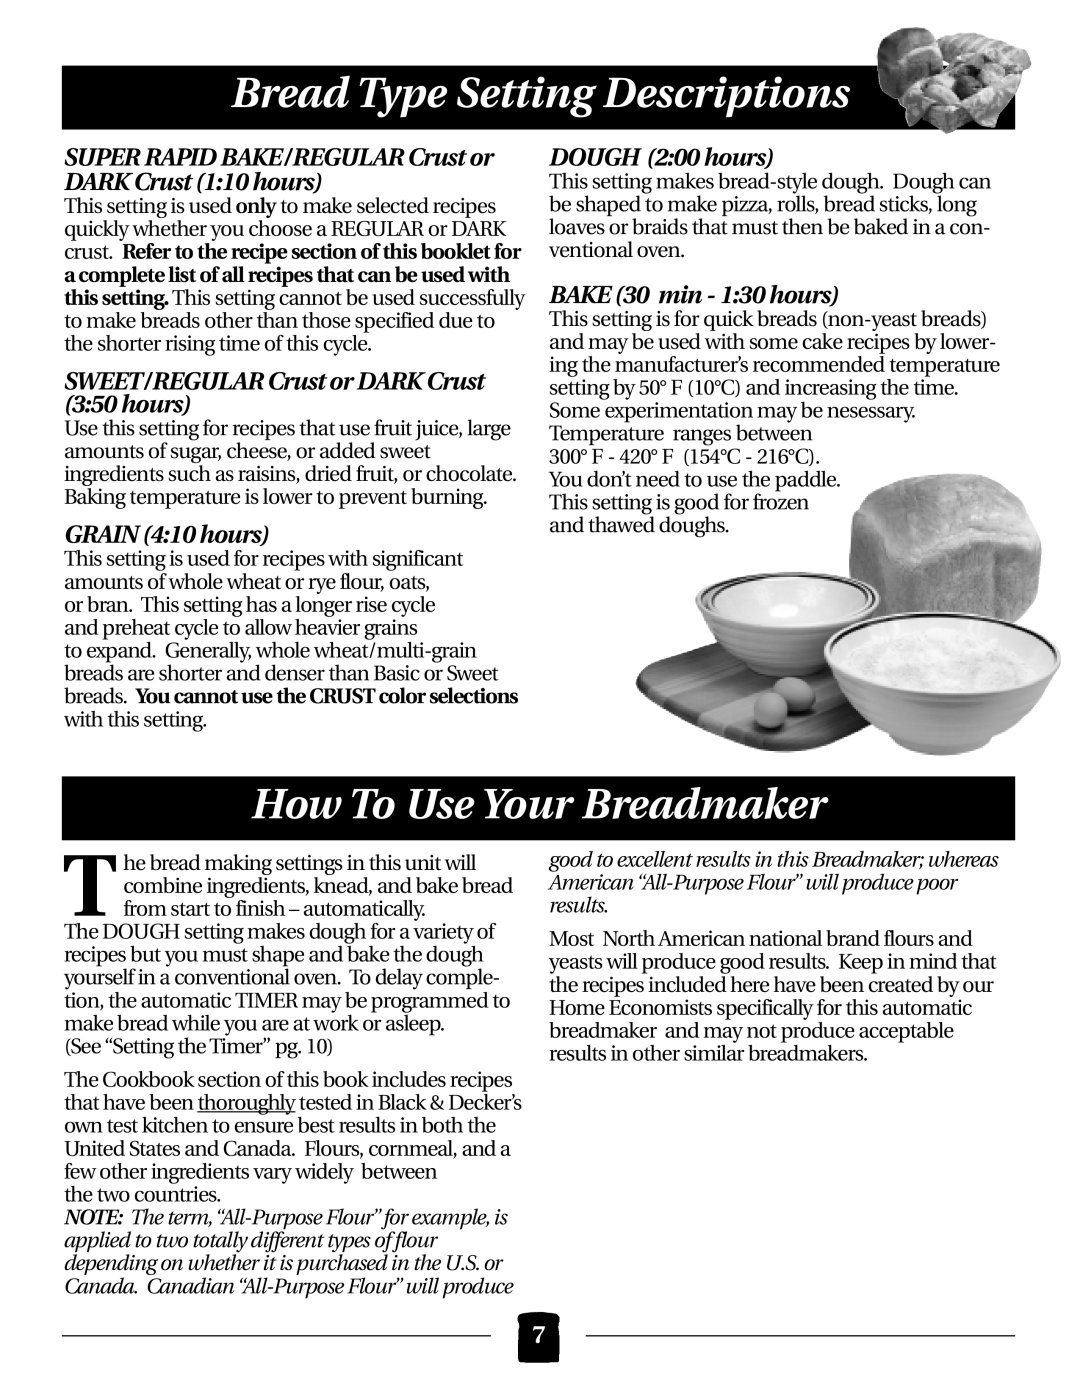 Black & Decker B2000 How To Use Your Breadmaker, Bread Type Setting Descriptions, GRAIN 4 10 hours, DOUGH 2 00 hours 